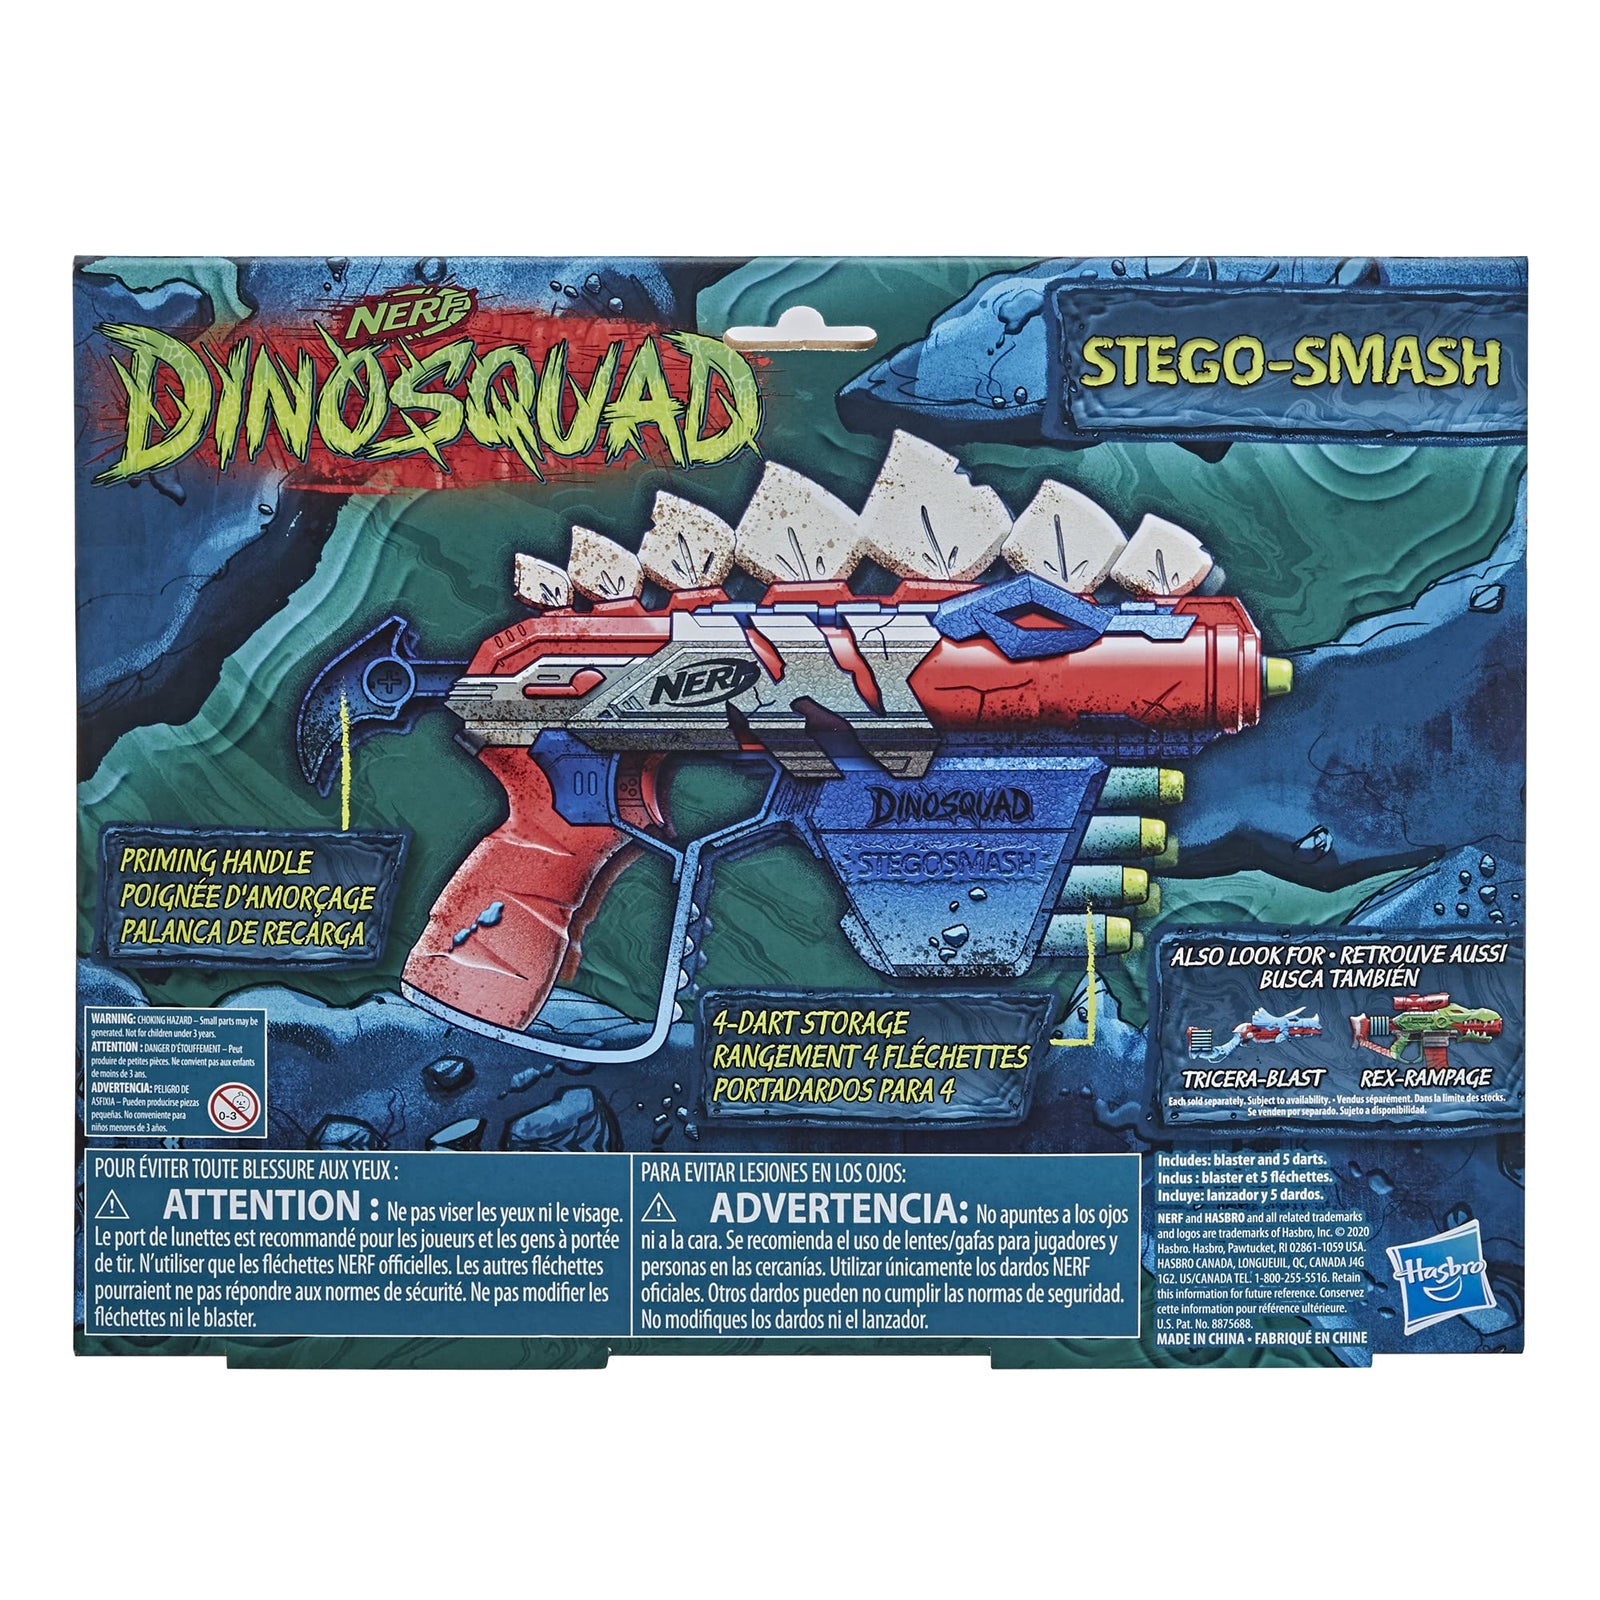 NERF DinoSquad Stegosmash Dart Blaster, 4-Dart Storage, Pull-Back Priming Handle, 5 Official Darts, Dinosaur Design, Stegosaurus Spikes